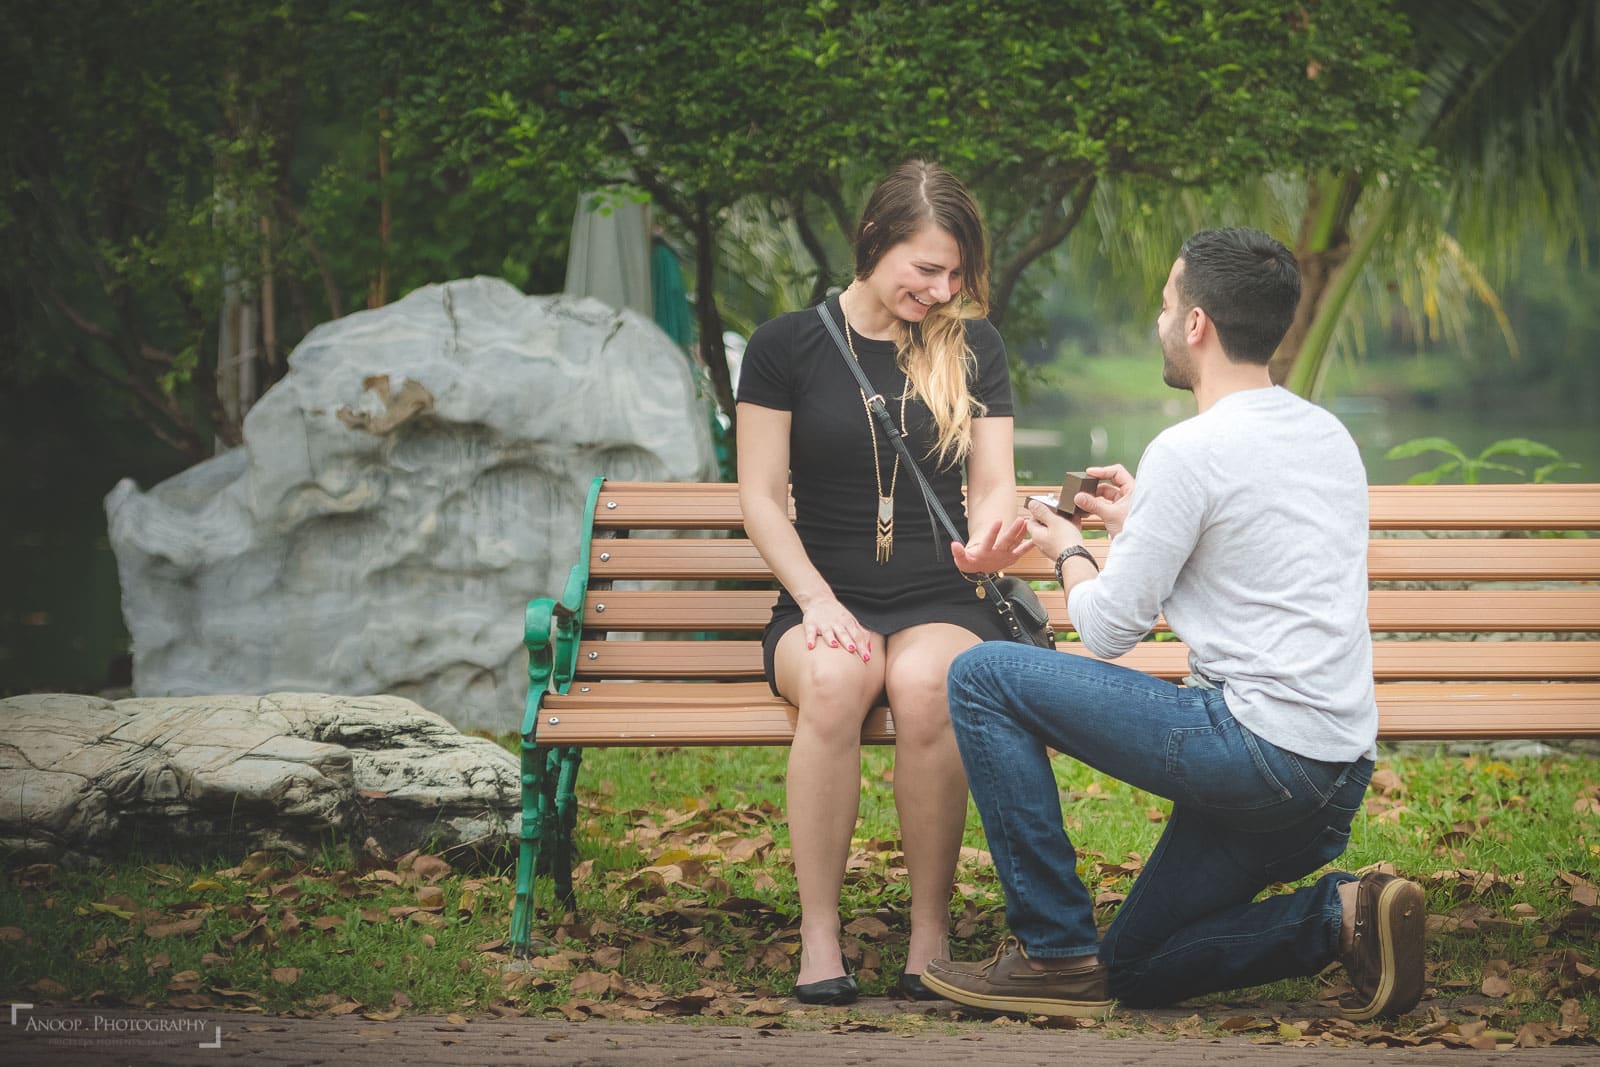 surprise-proposal-photography-thailand-marriage-proposal-ideas-photos12